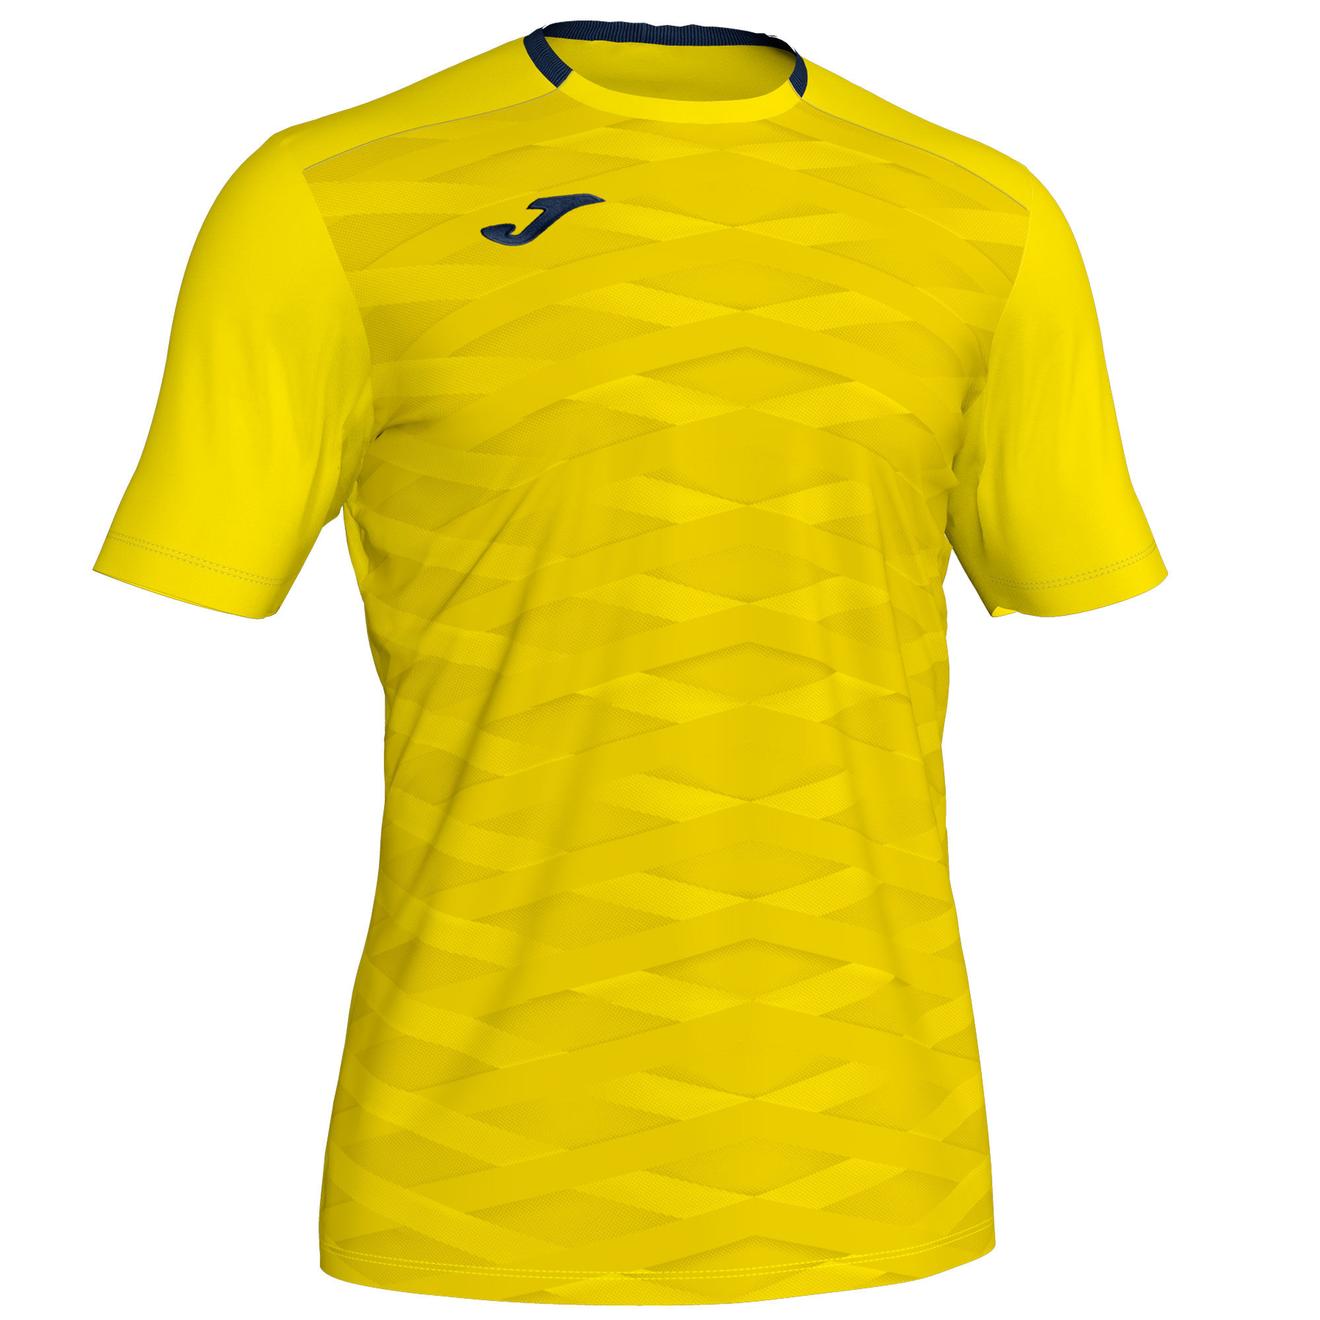 Oferta de Camiseta manga corta hombre Myskin Academy amarillo por $287.5 en Joma